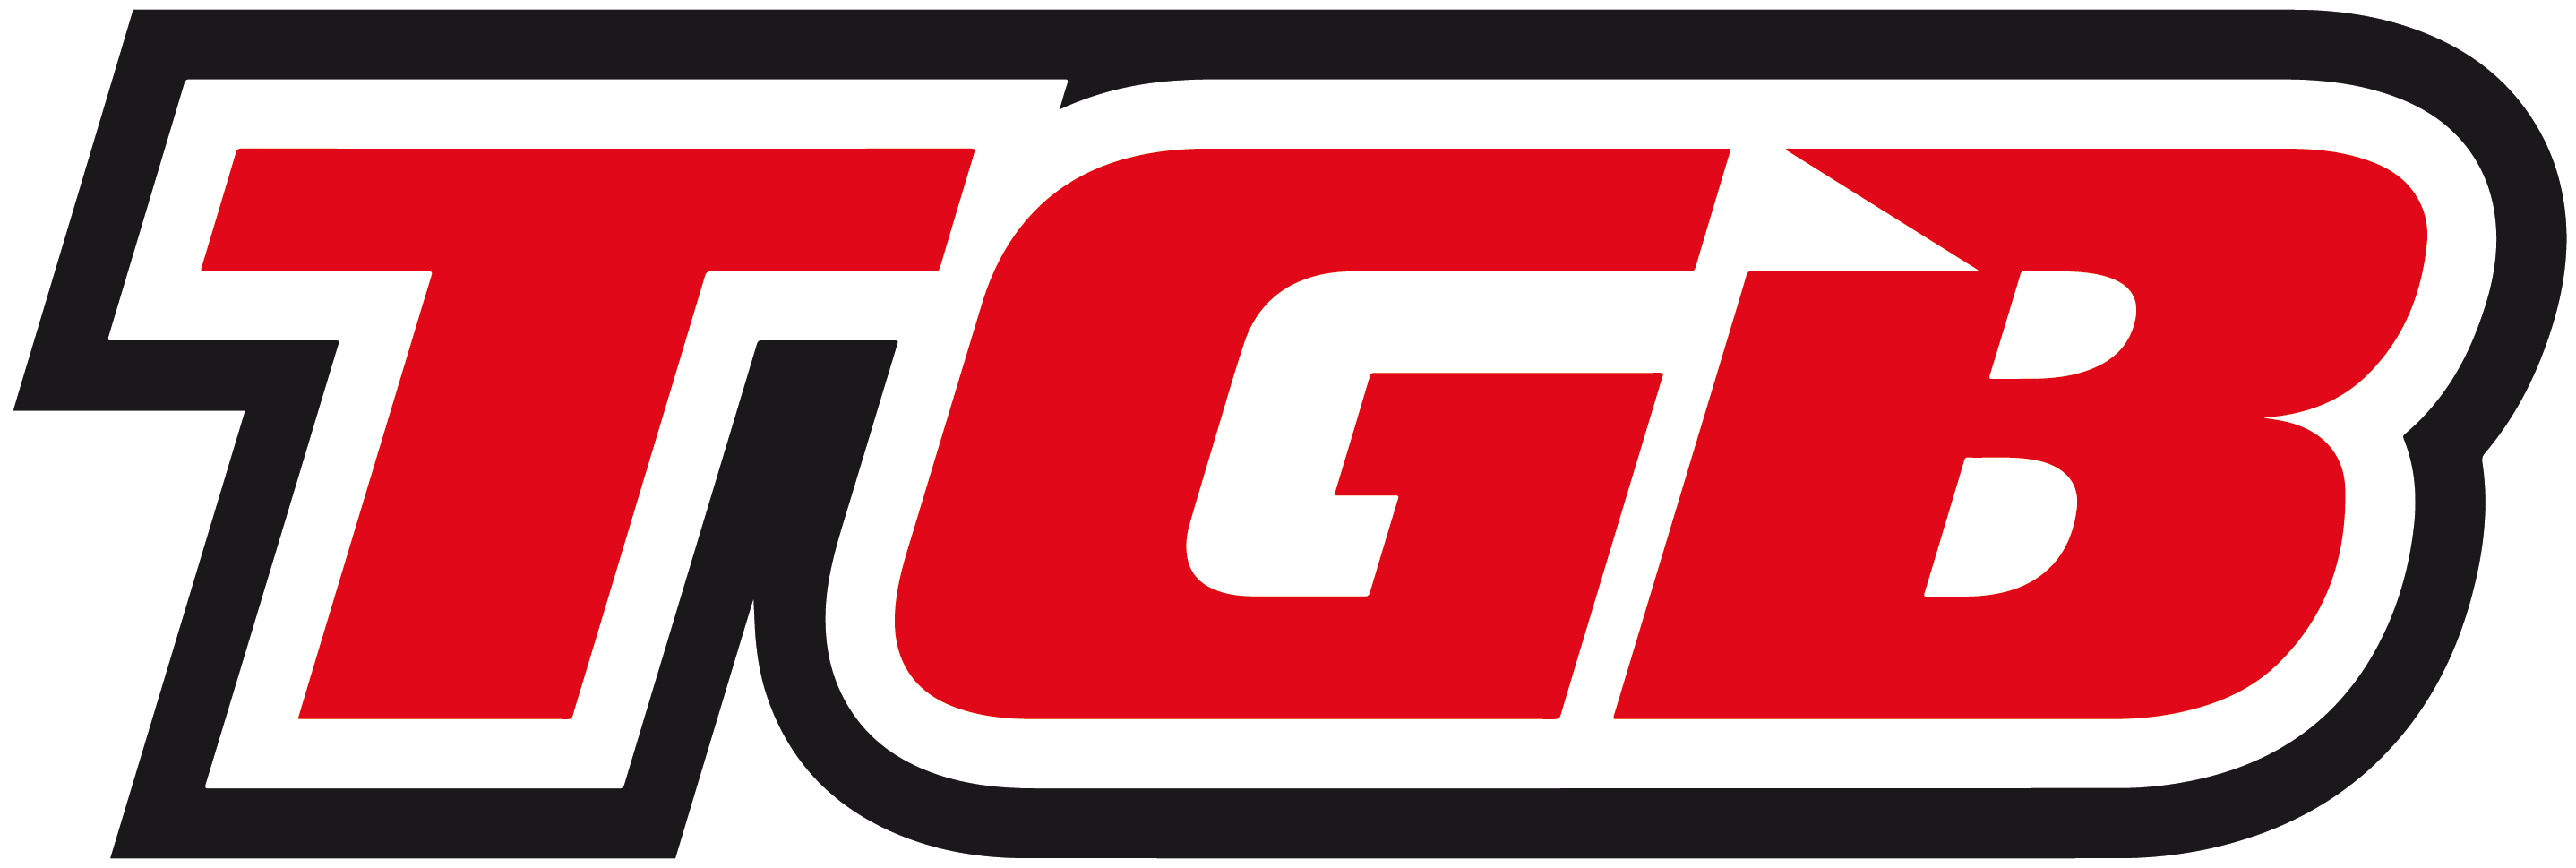 Logo TGB HD